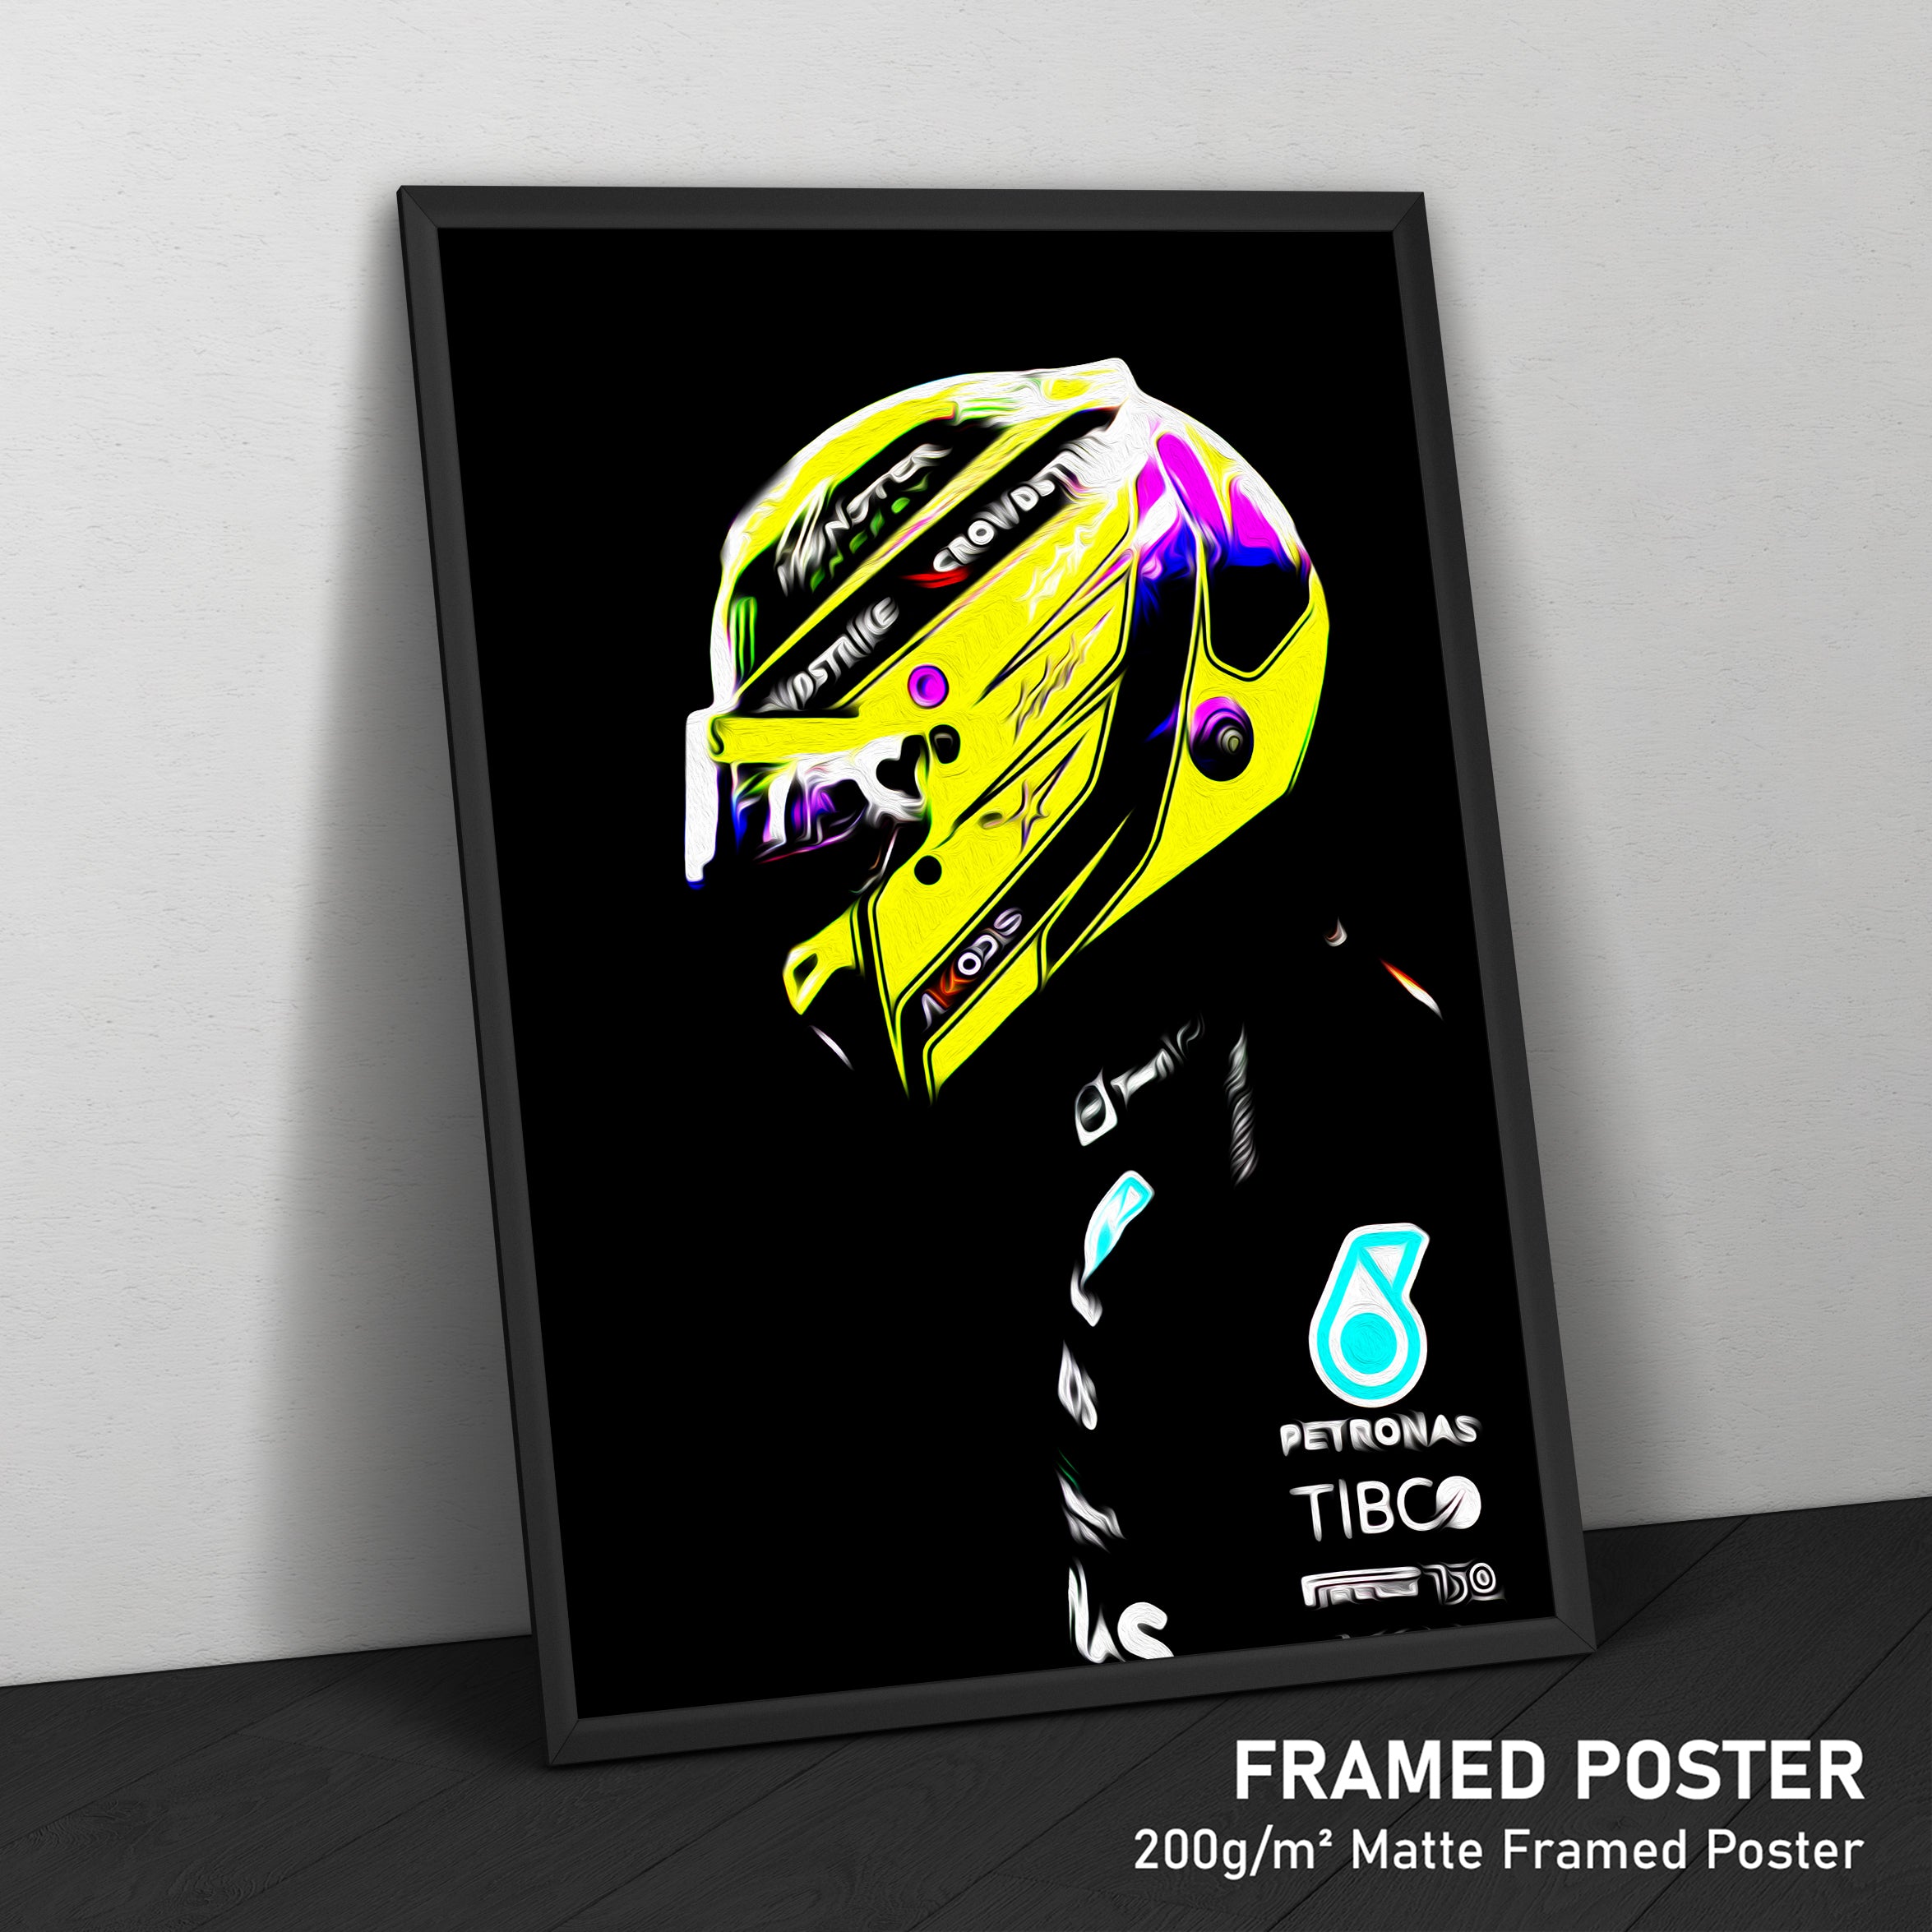 Formula 1 Mercedes-Benz F1, Lewis Hamilton High-Quality 22inx17in Art  Poster#